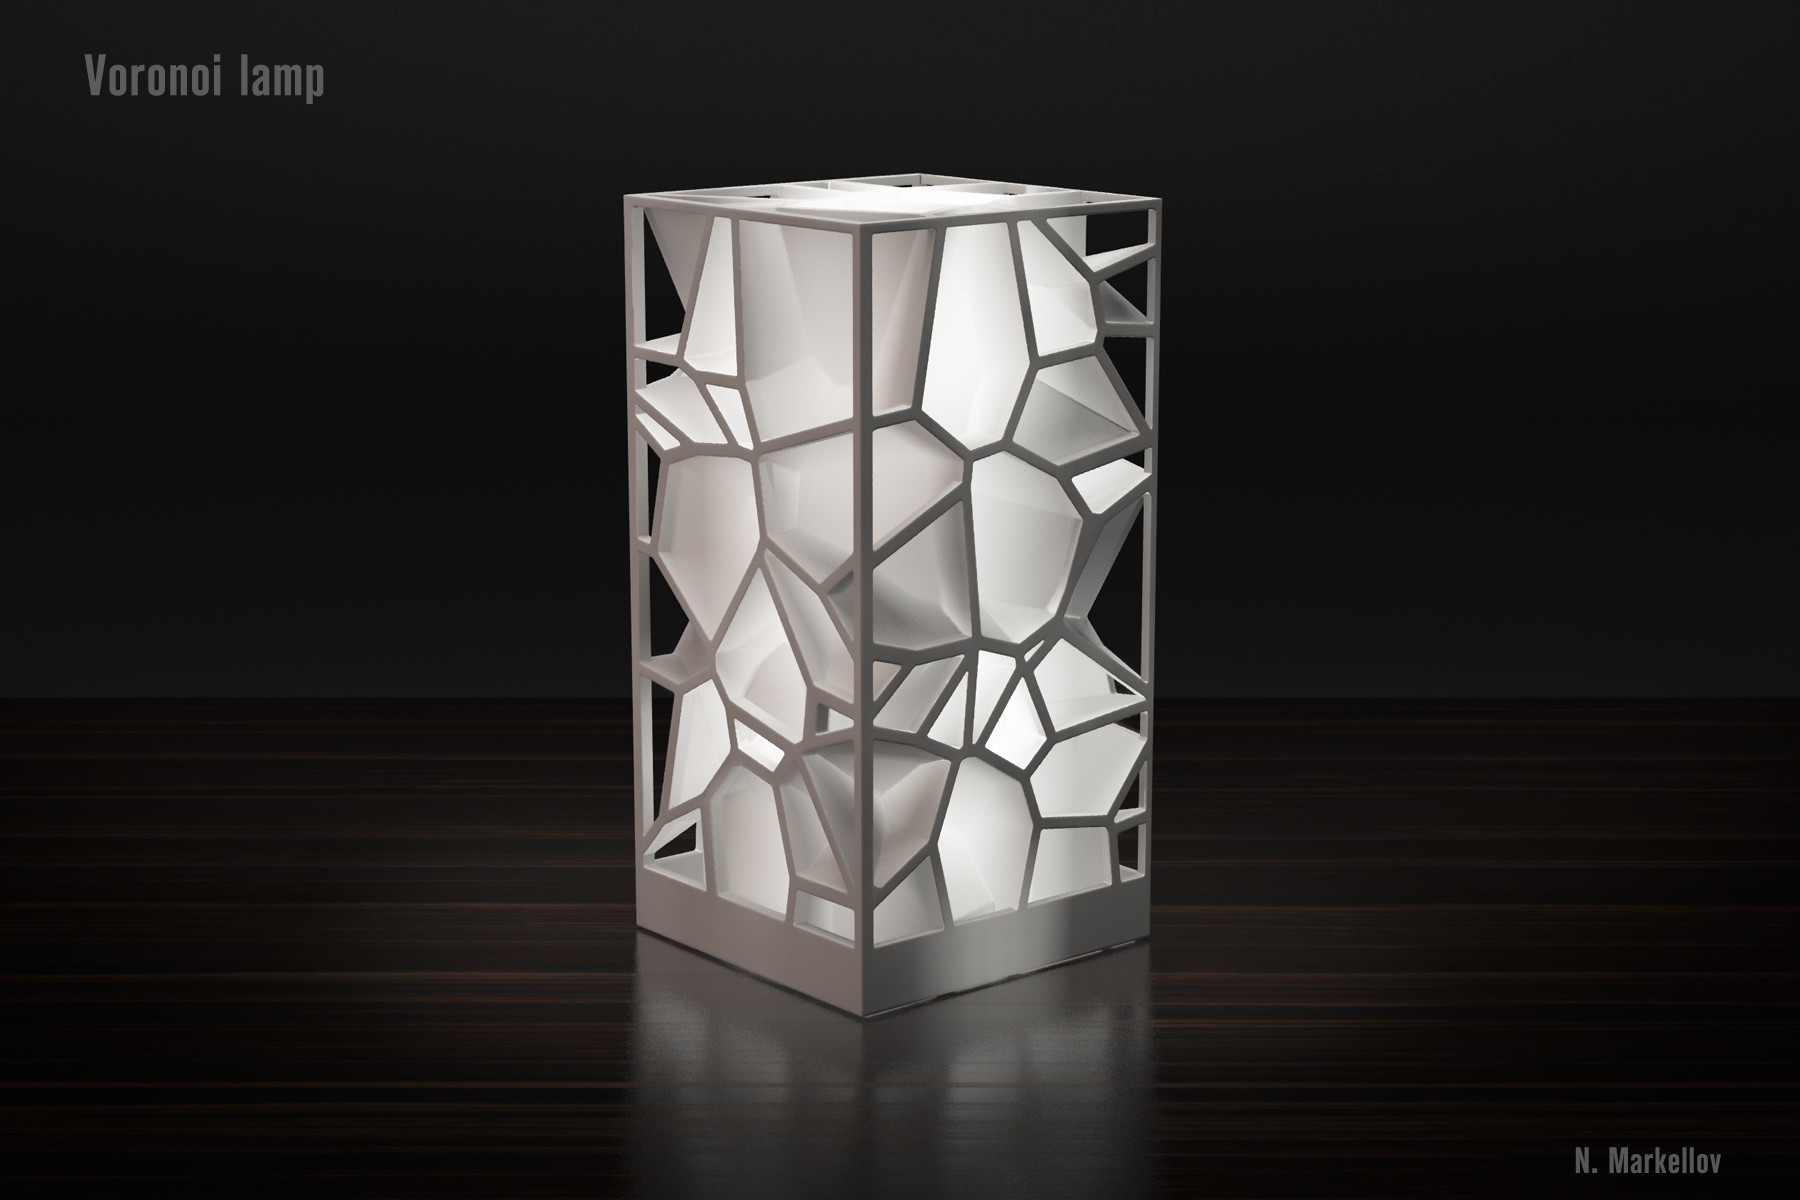 glass skull vase of voronoi lamp by markellov thingiverse within by markellov dec 9 2014 view original